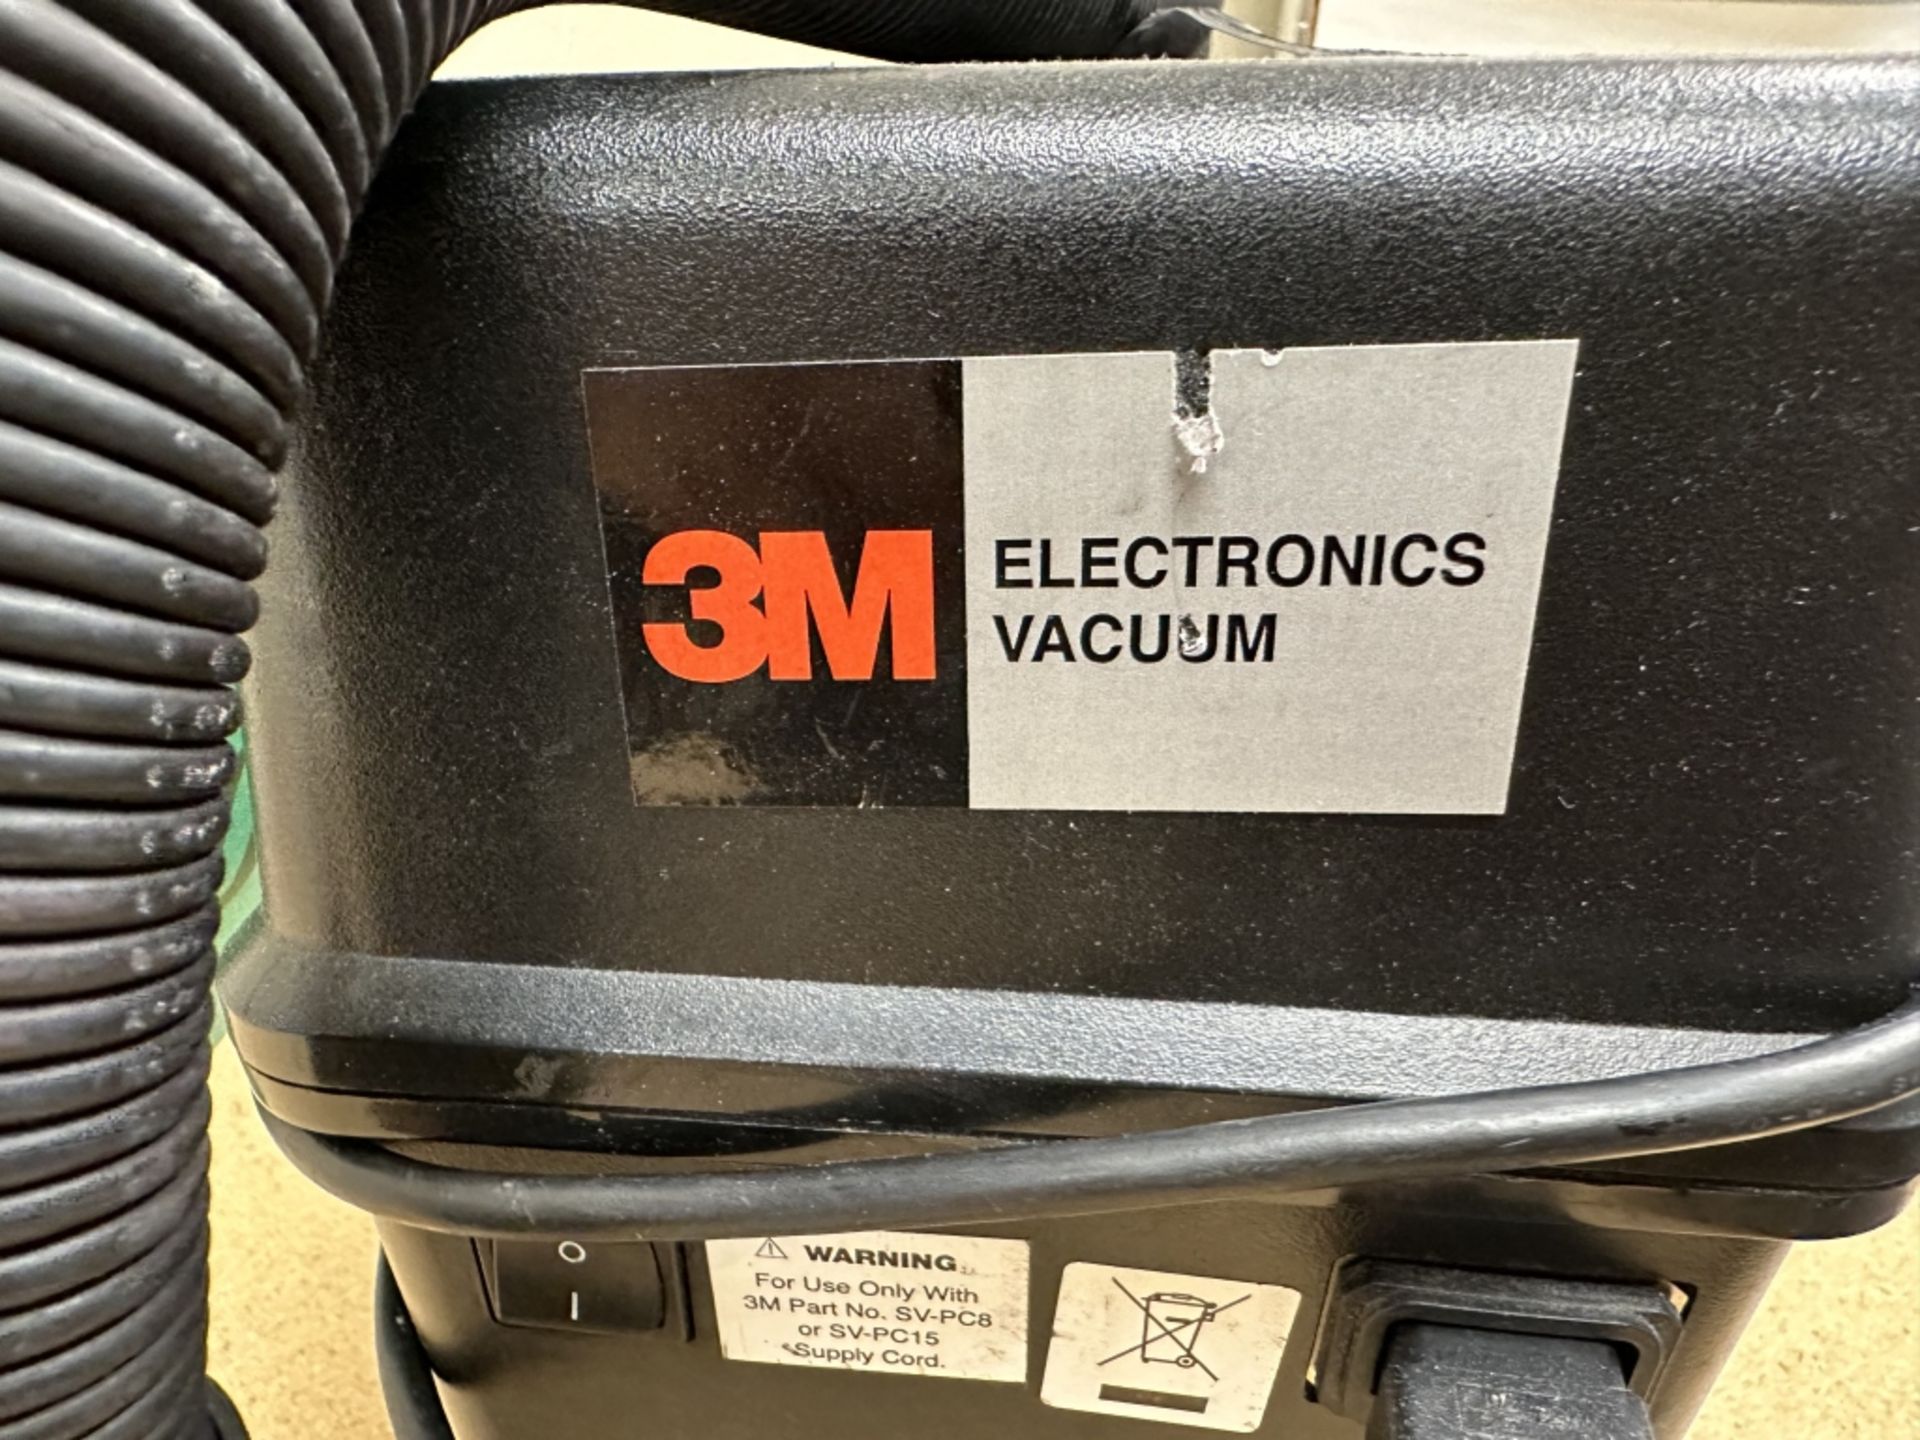 3M ELECTRONICS VACUUM CLEANER - Image 2 of 2